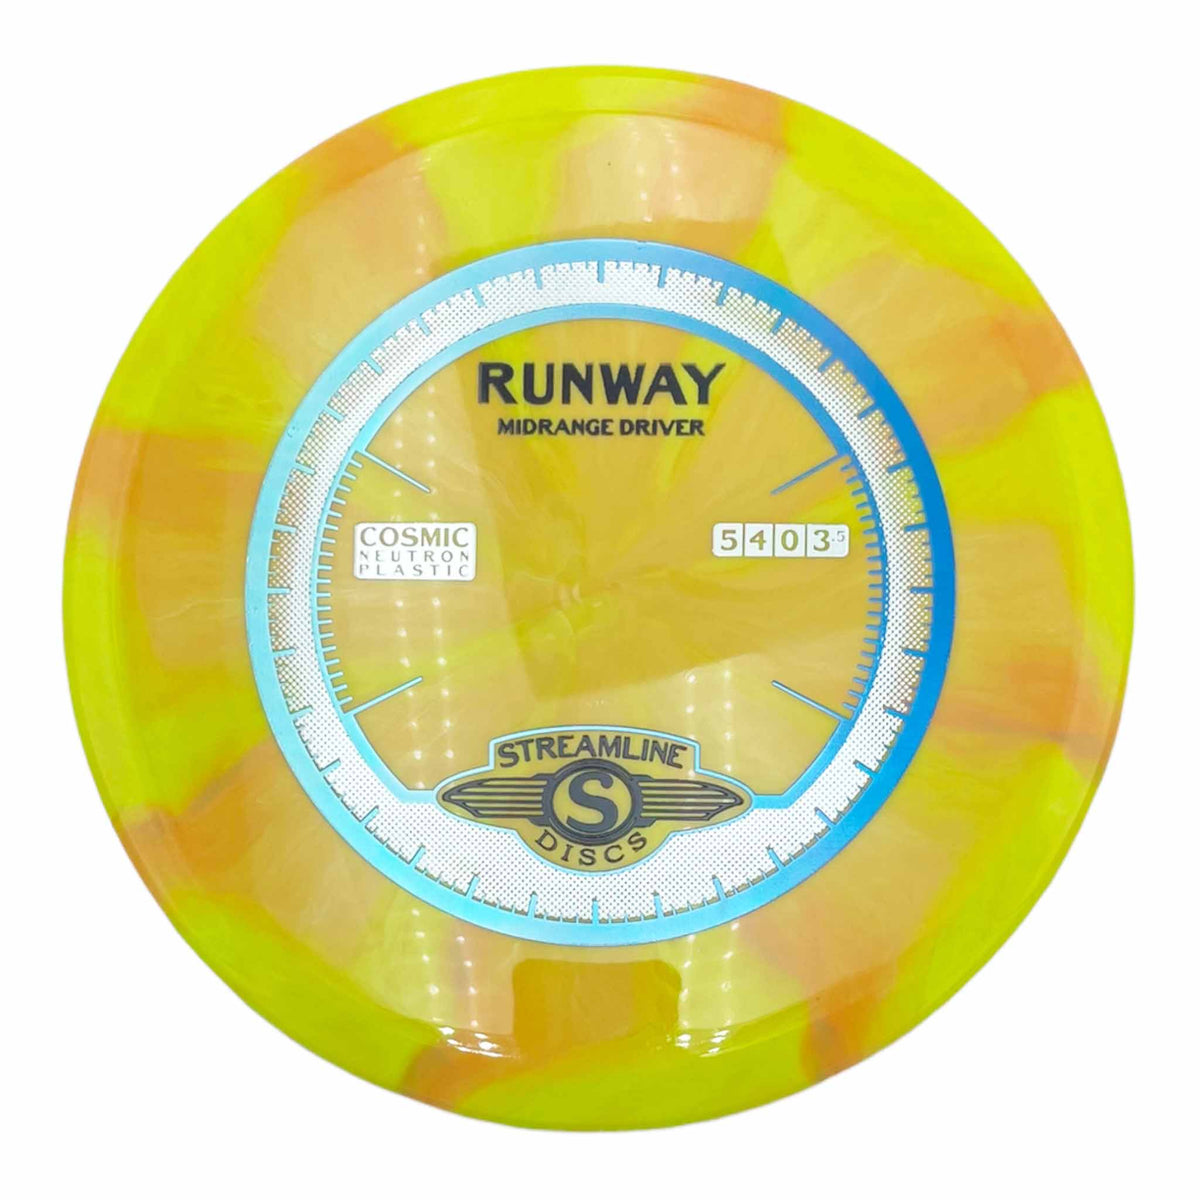 Streamline Discs Cosmic Neutron Runway midrange - Yellow